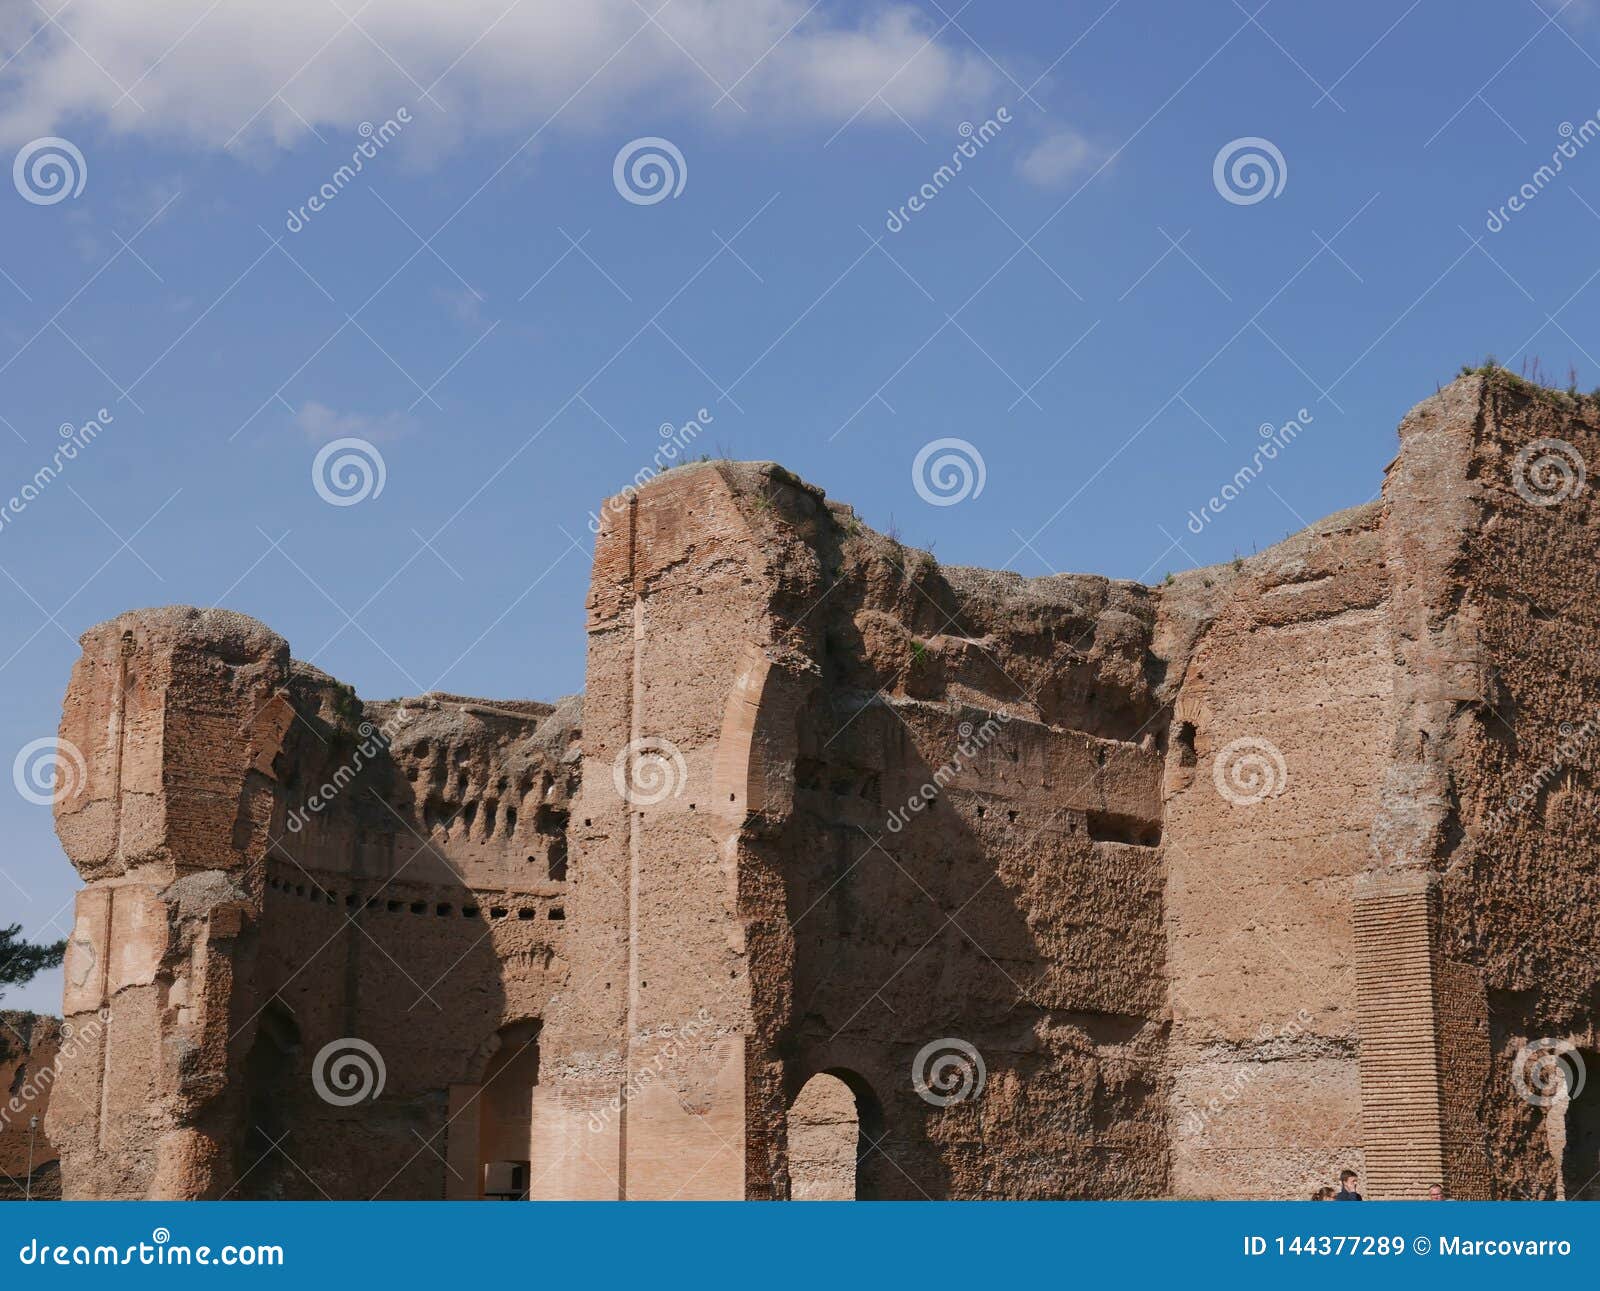 terme di caracalla ancient roman ruins in rome